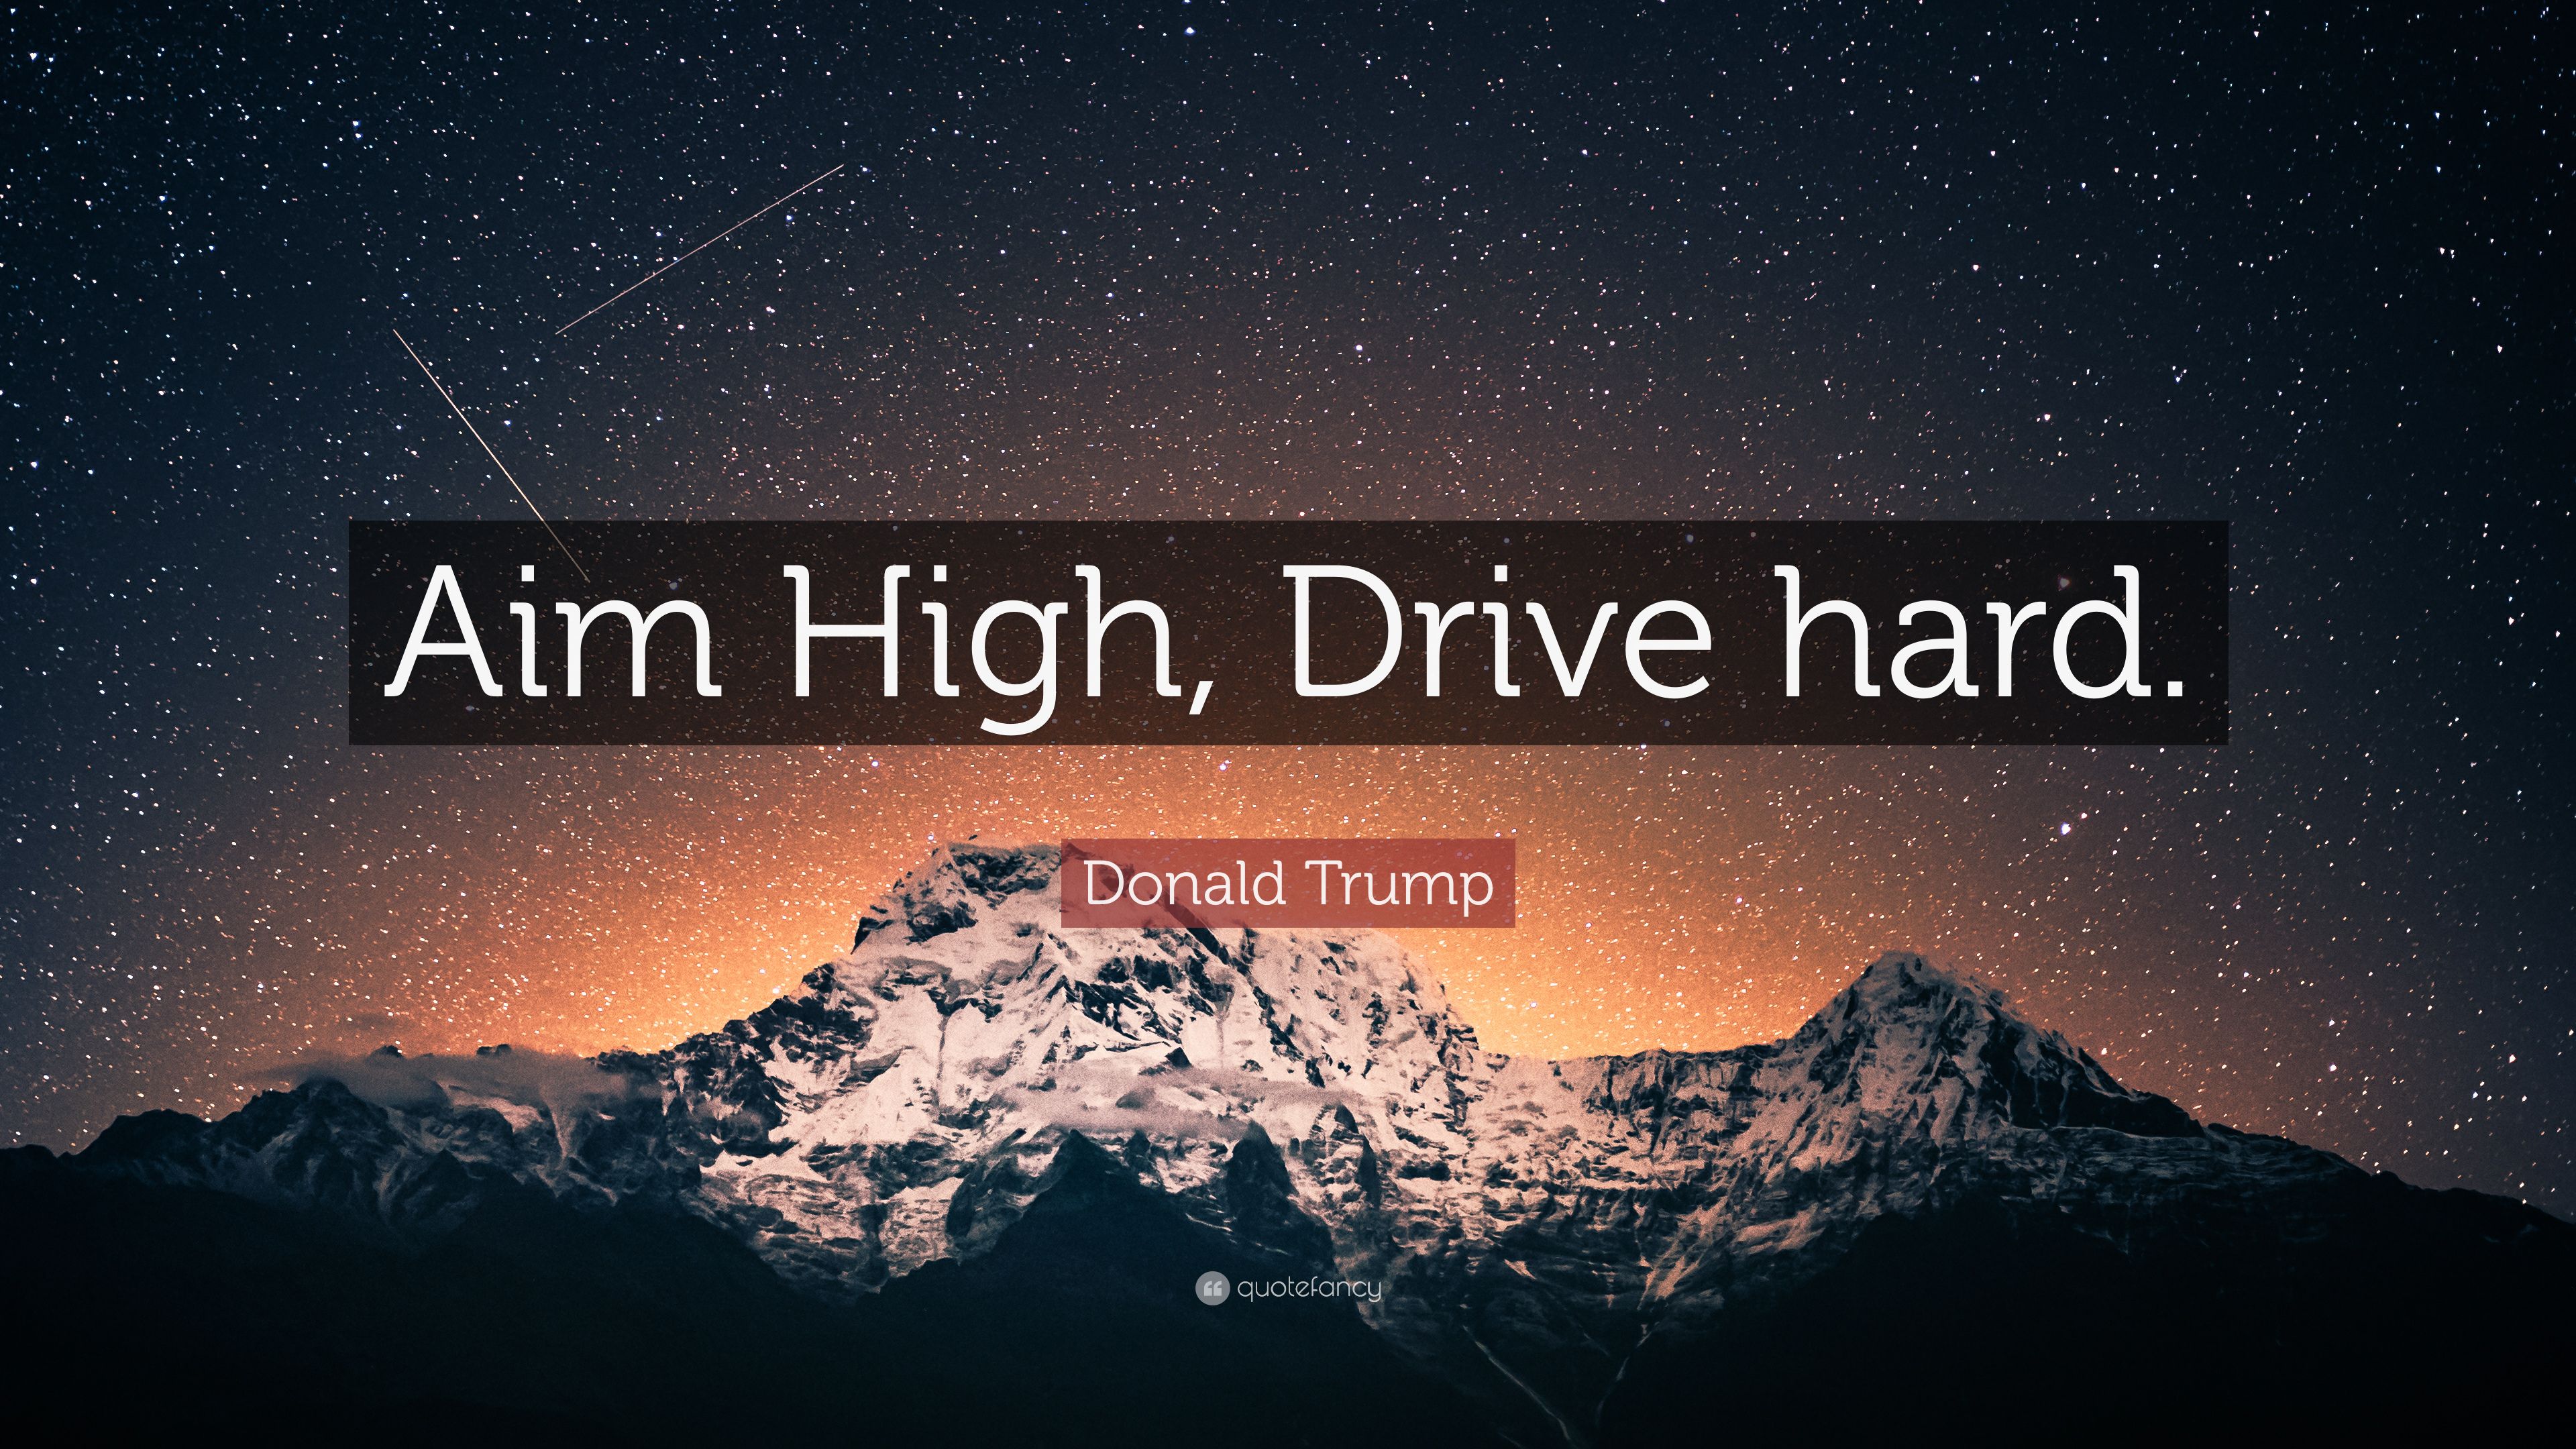 Donald Trump Quote: “Aim High, Drive hard.” 9 wallpaper